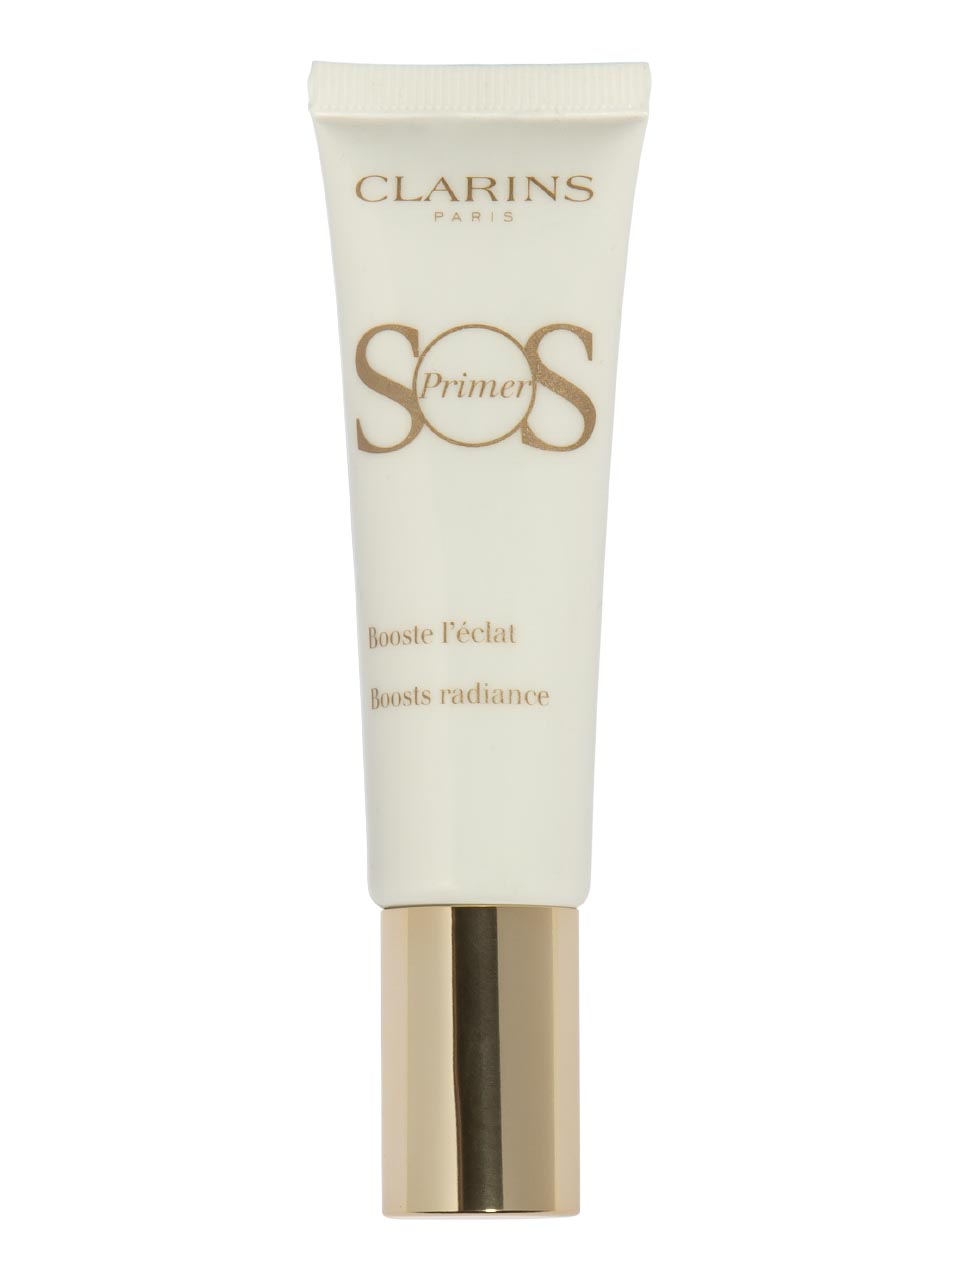 Clarins SOS primer SOS Primer N° 0 Universal light 30 ml null - onesize - 1